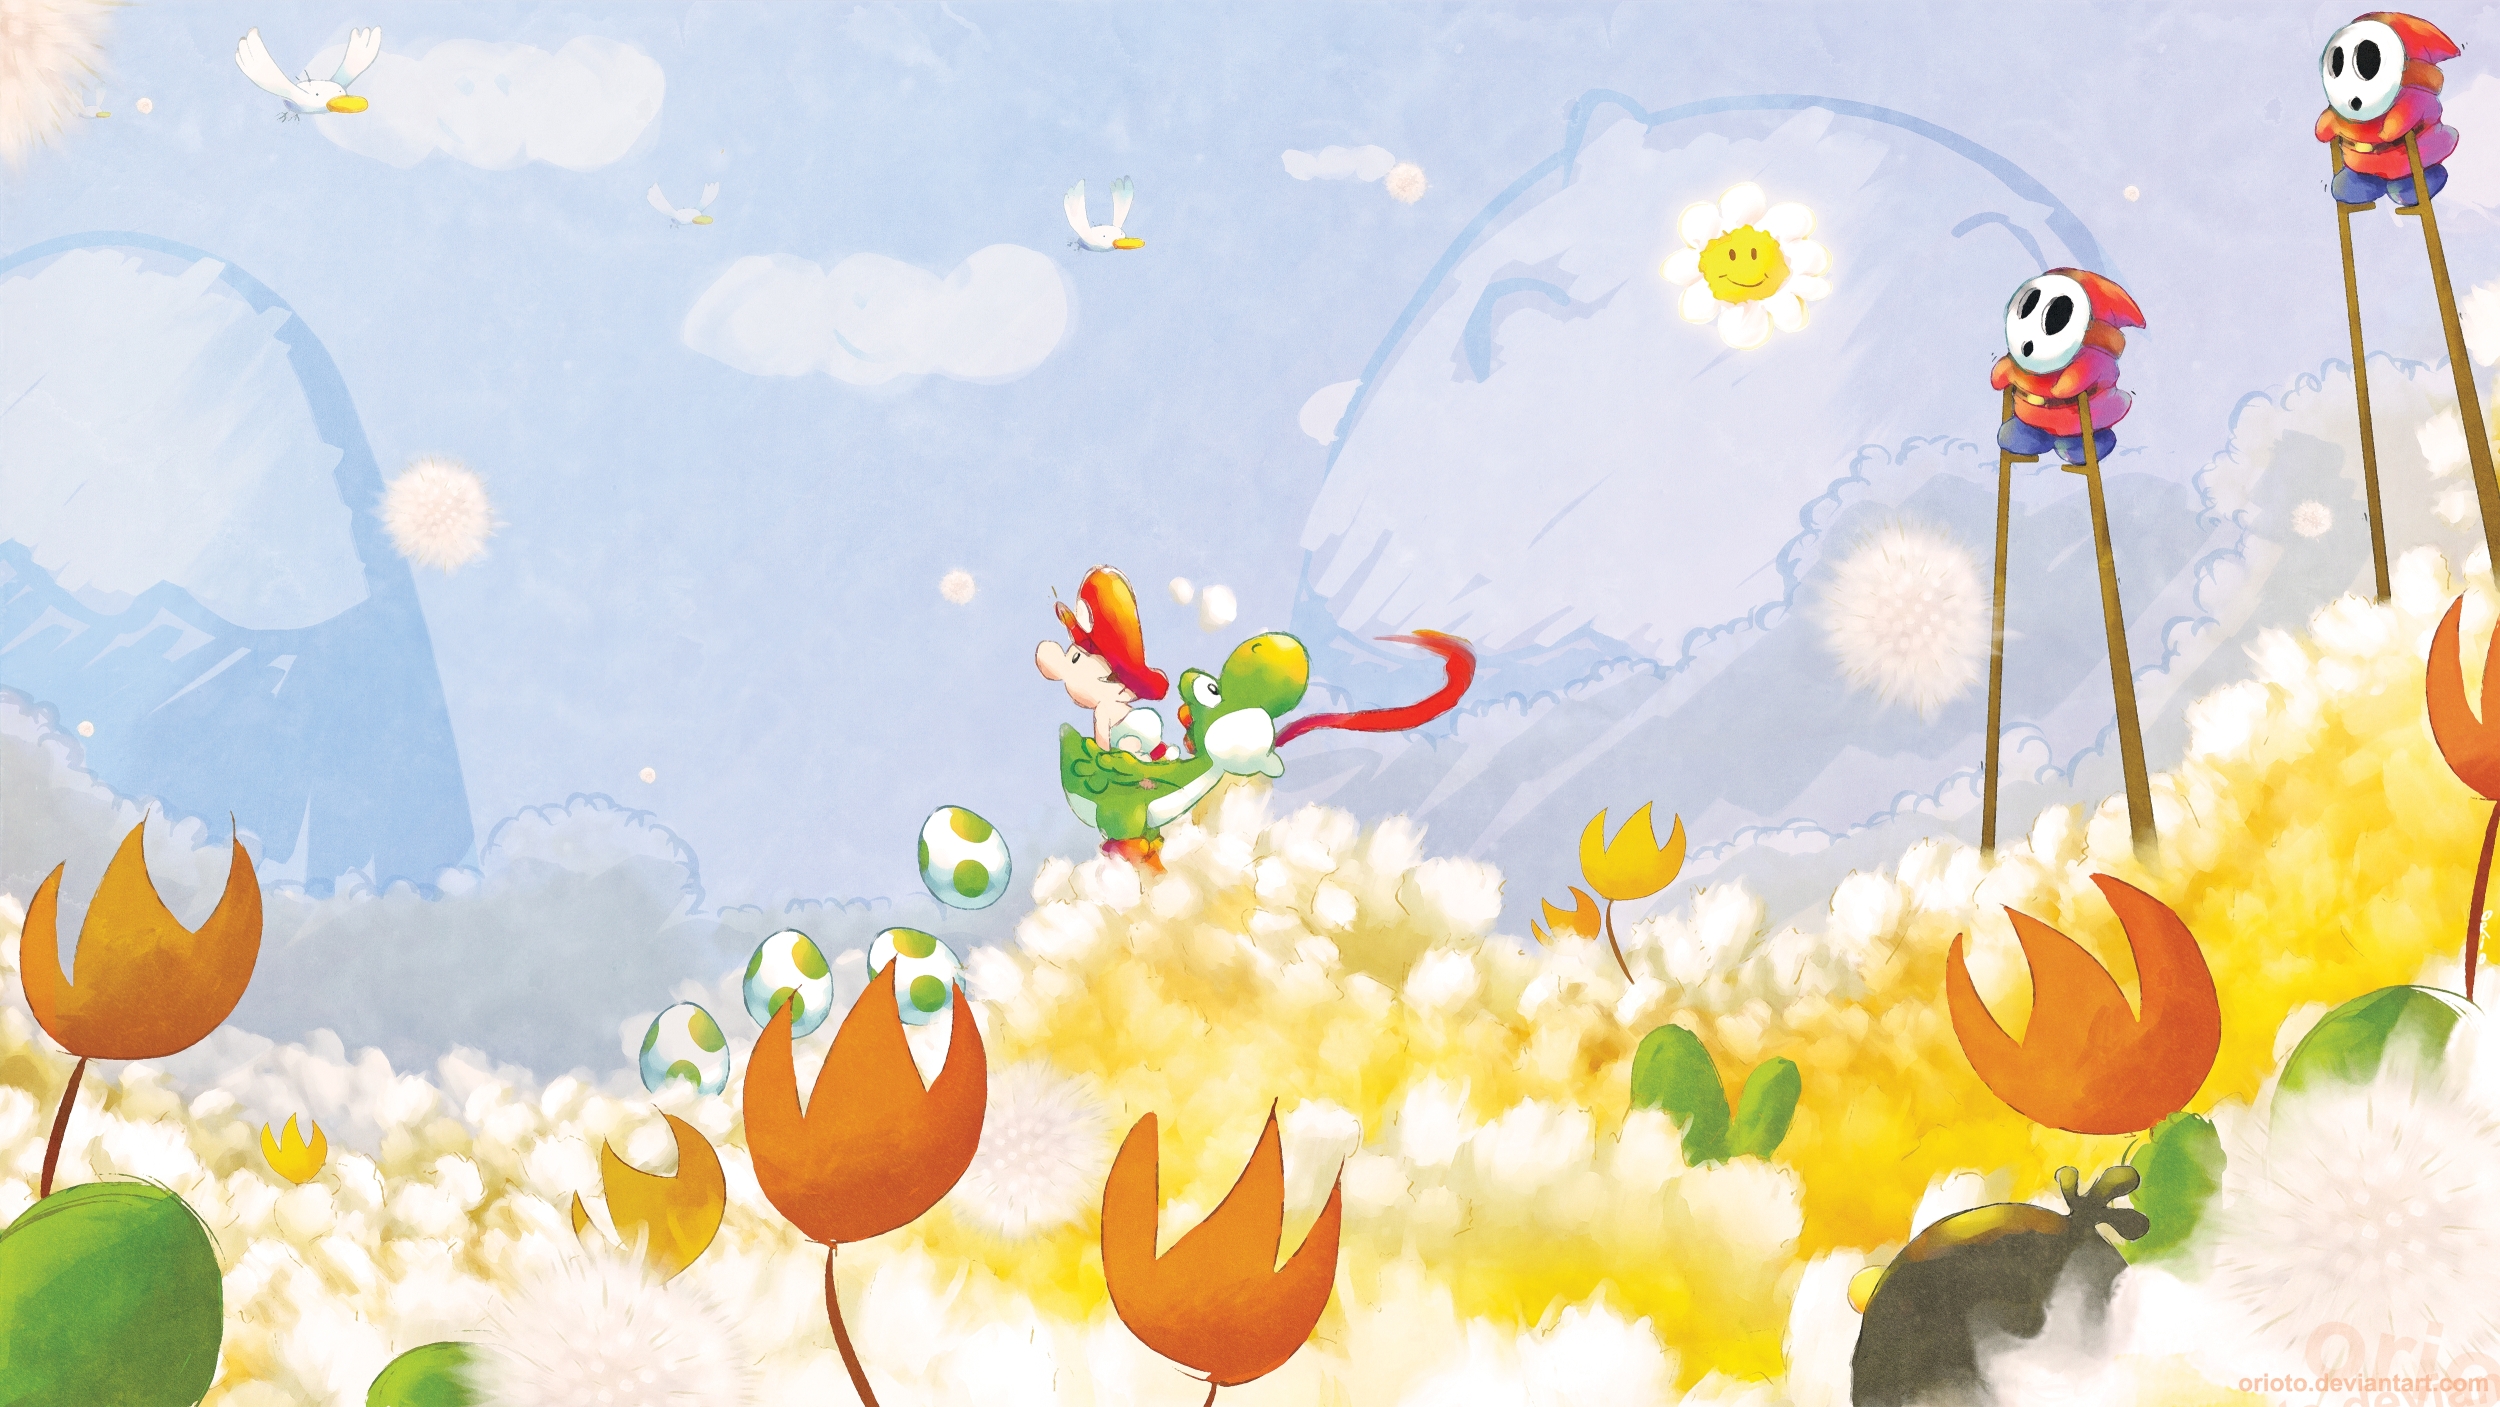 Video Game Super Mario World 2: Yoshi's Island HD Wallpaper | Background Image